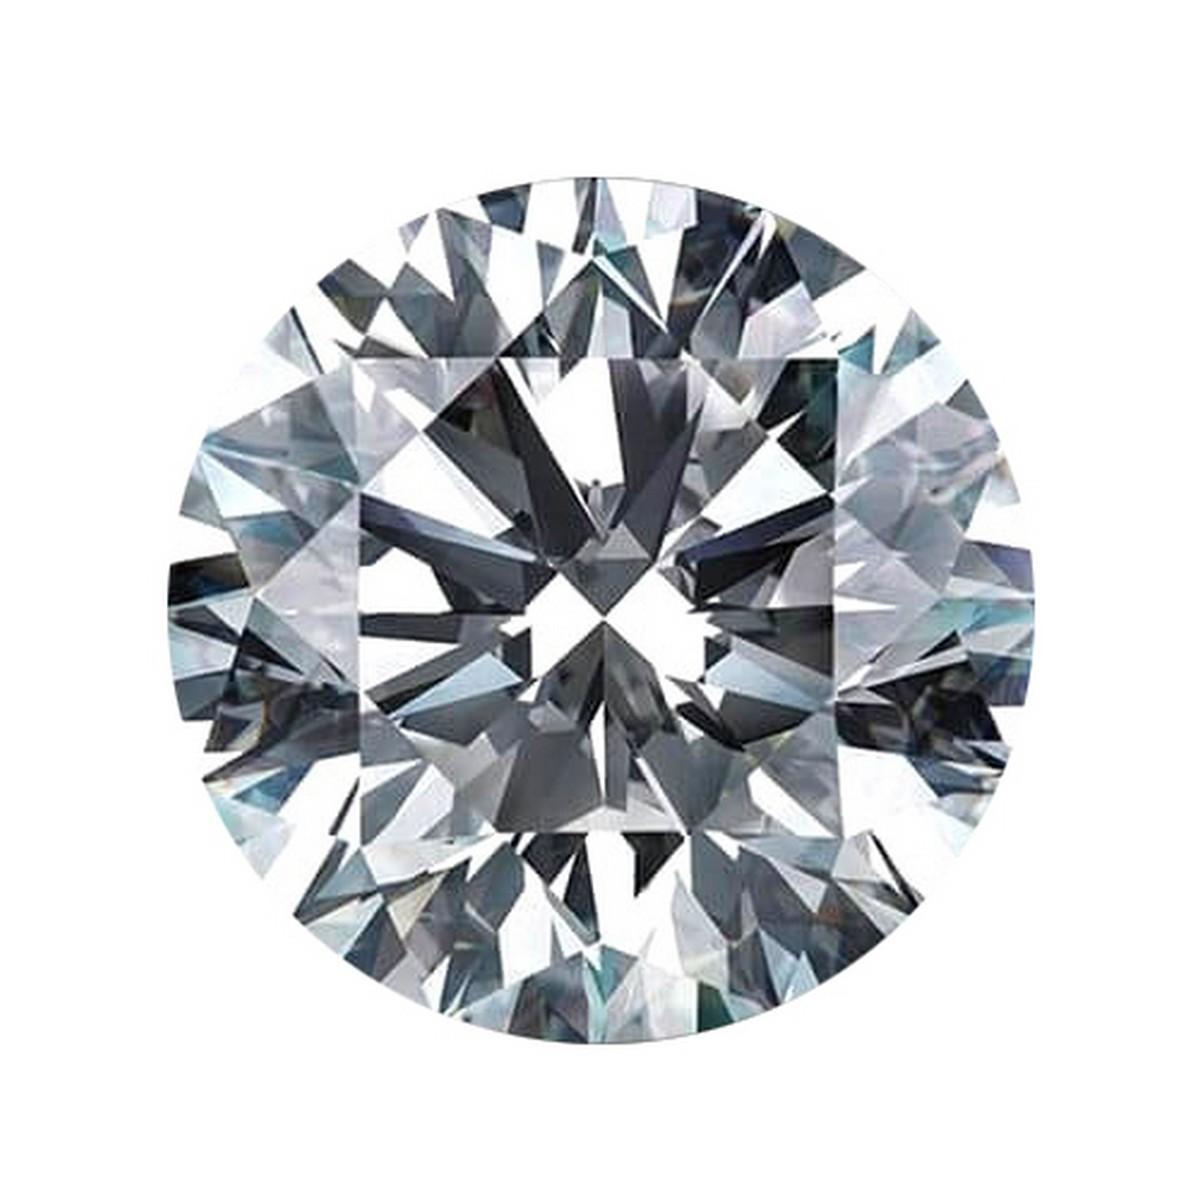 2.6 ctw. VVS2 IGI Certified Round Cut Loose Diamond (LAB GROWN)